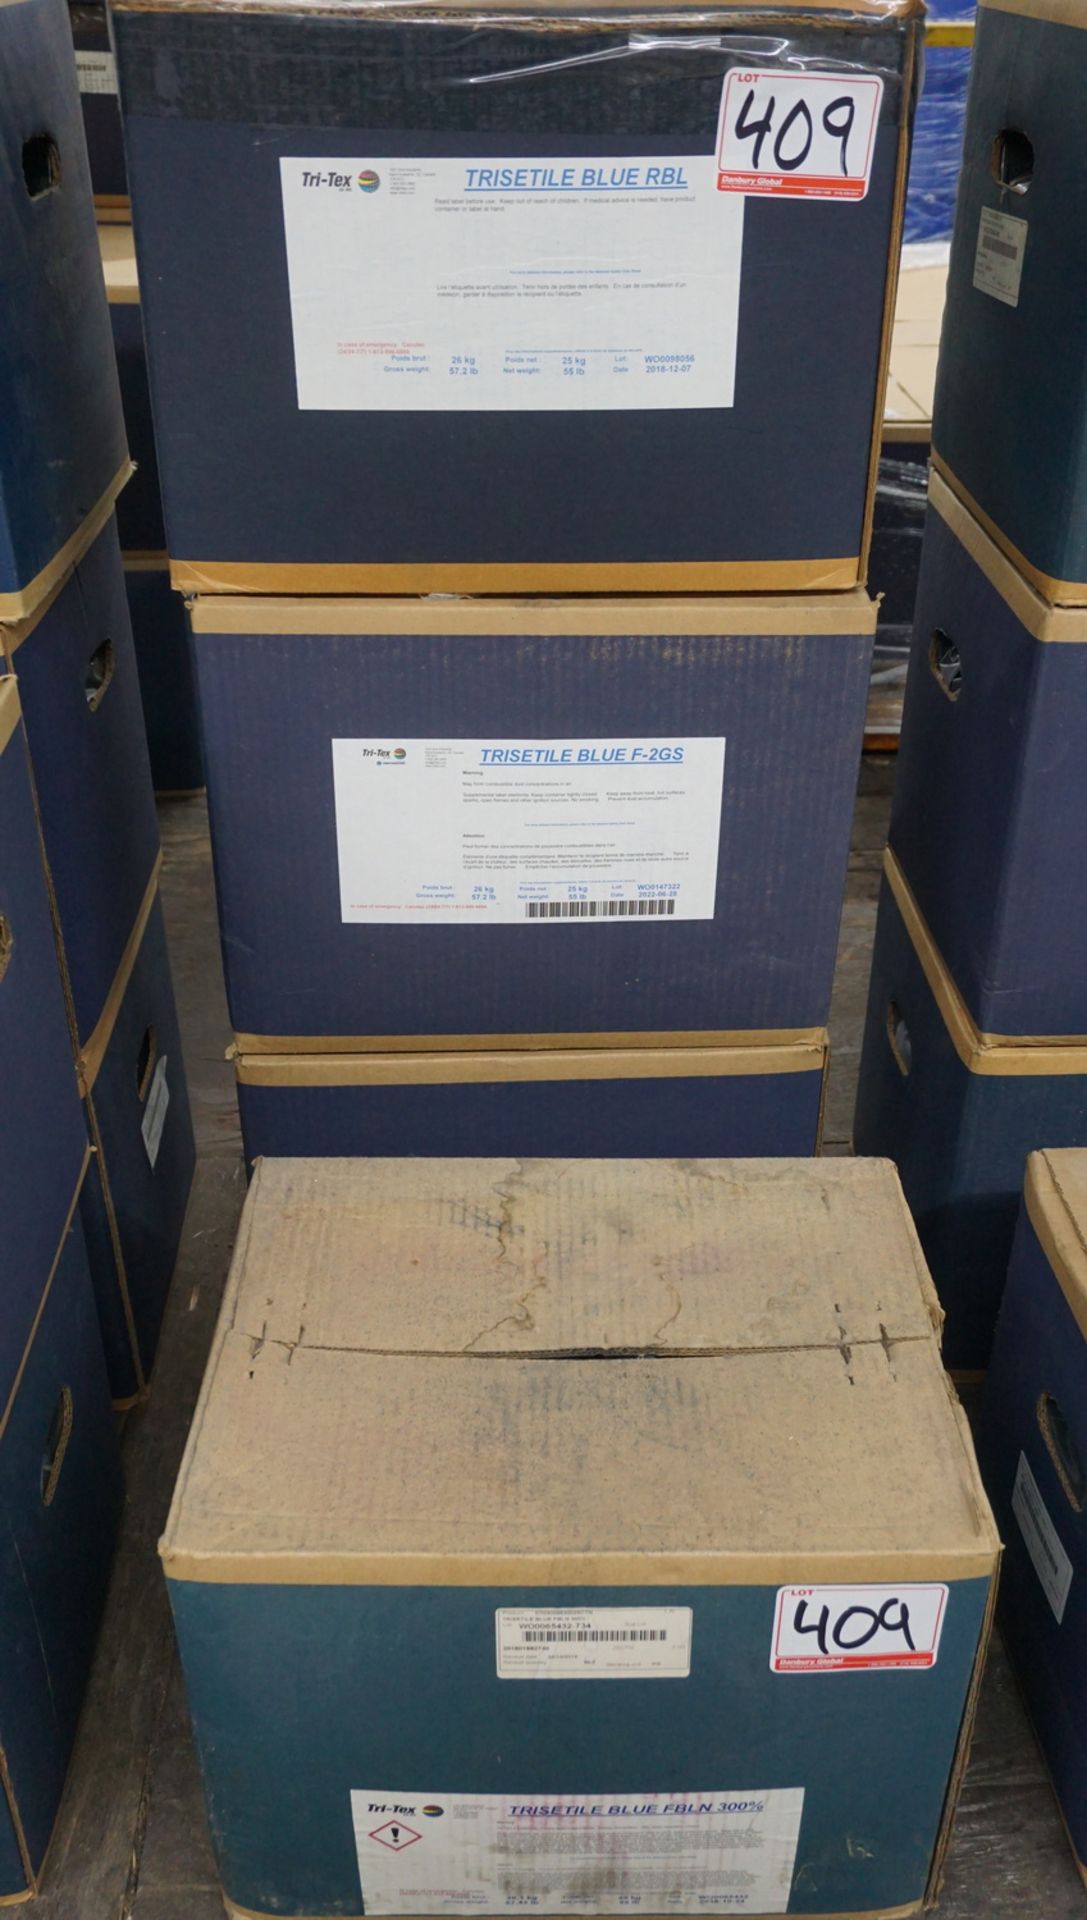 BOXES - ASSTD TRI-TEX TRISELITE BLUE RBL, F-2GS, K-F-FBL-2 300%, ETC (25KG/BOX)